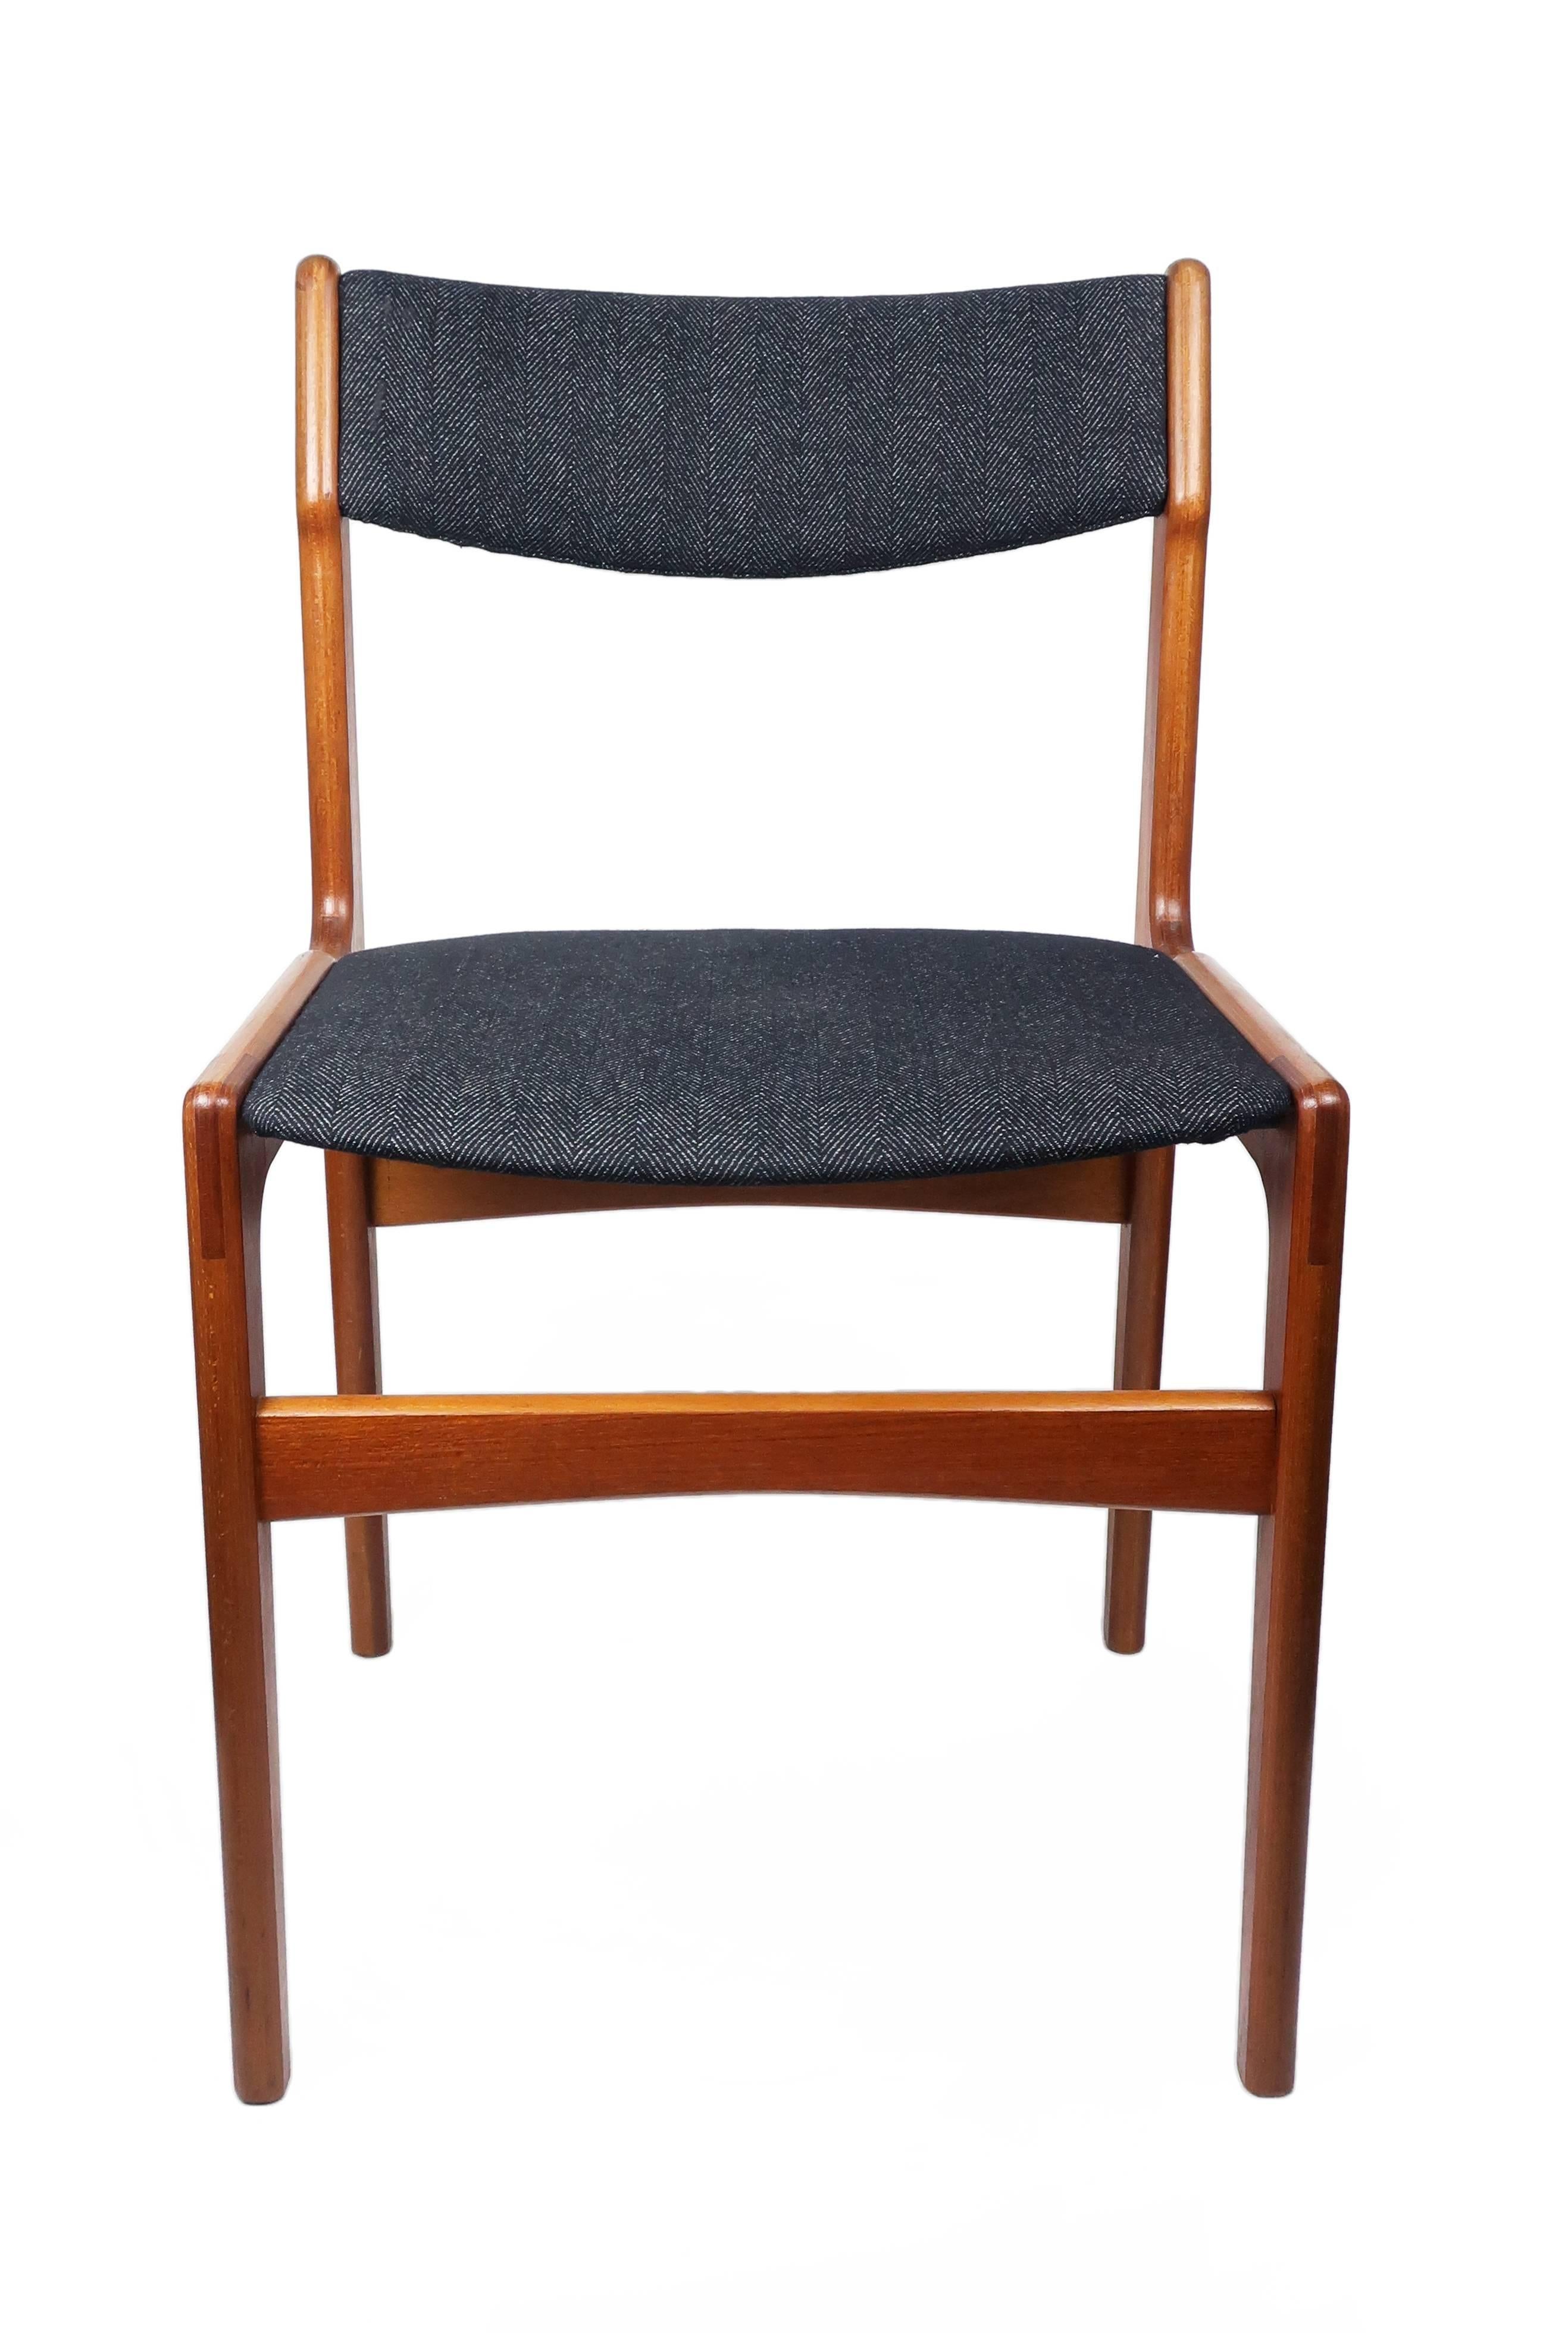 20th Century Set of Six of Danish Modern Dining Chairs, Erik Buch for Anderstrup Møbelfabrik